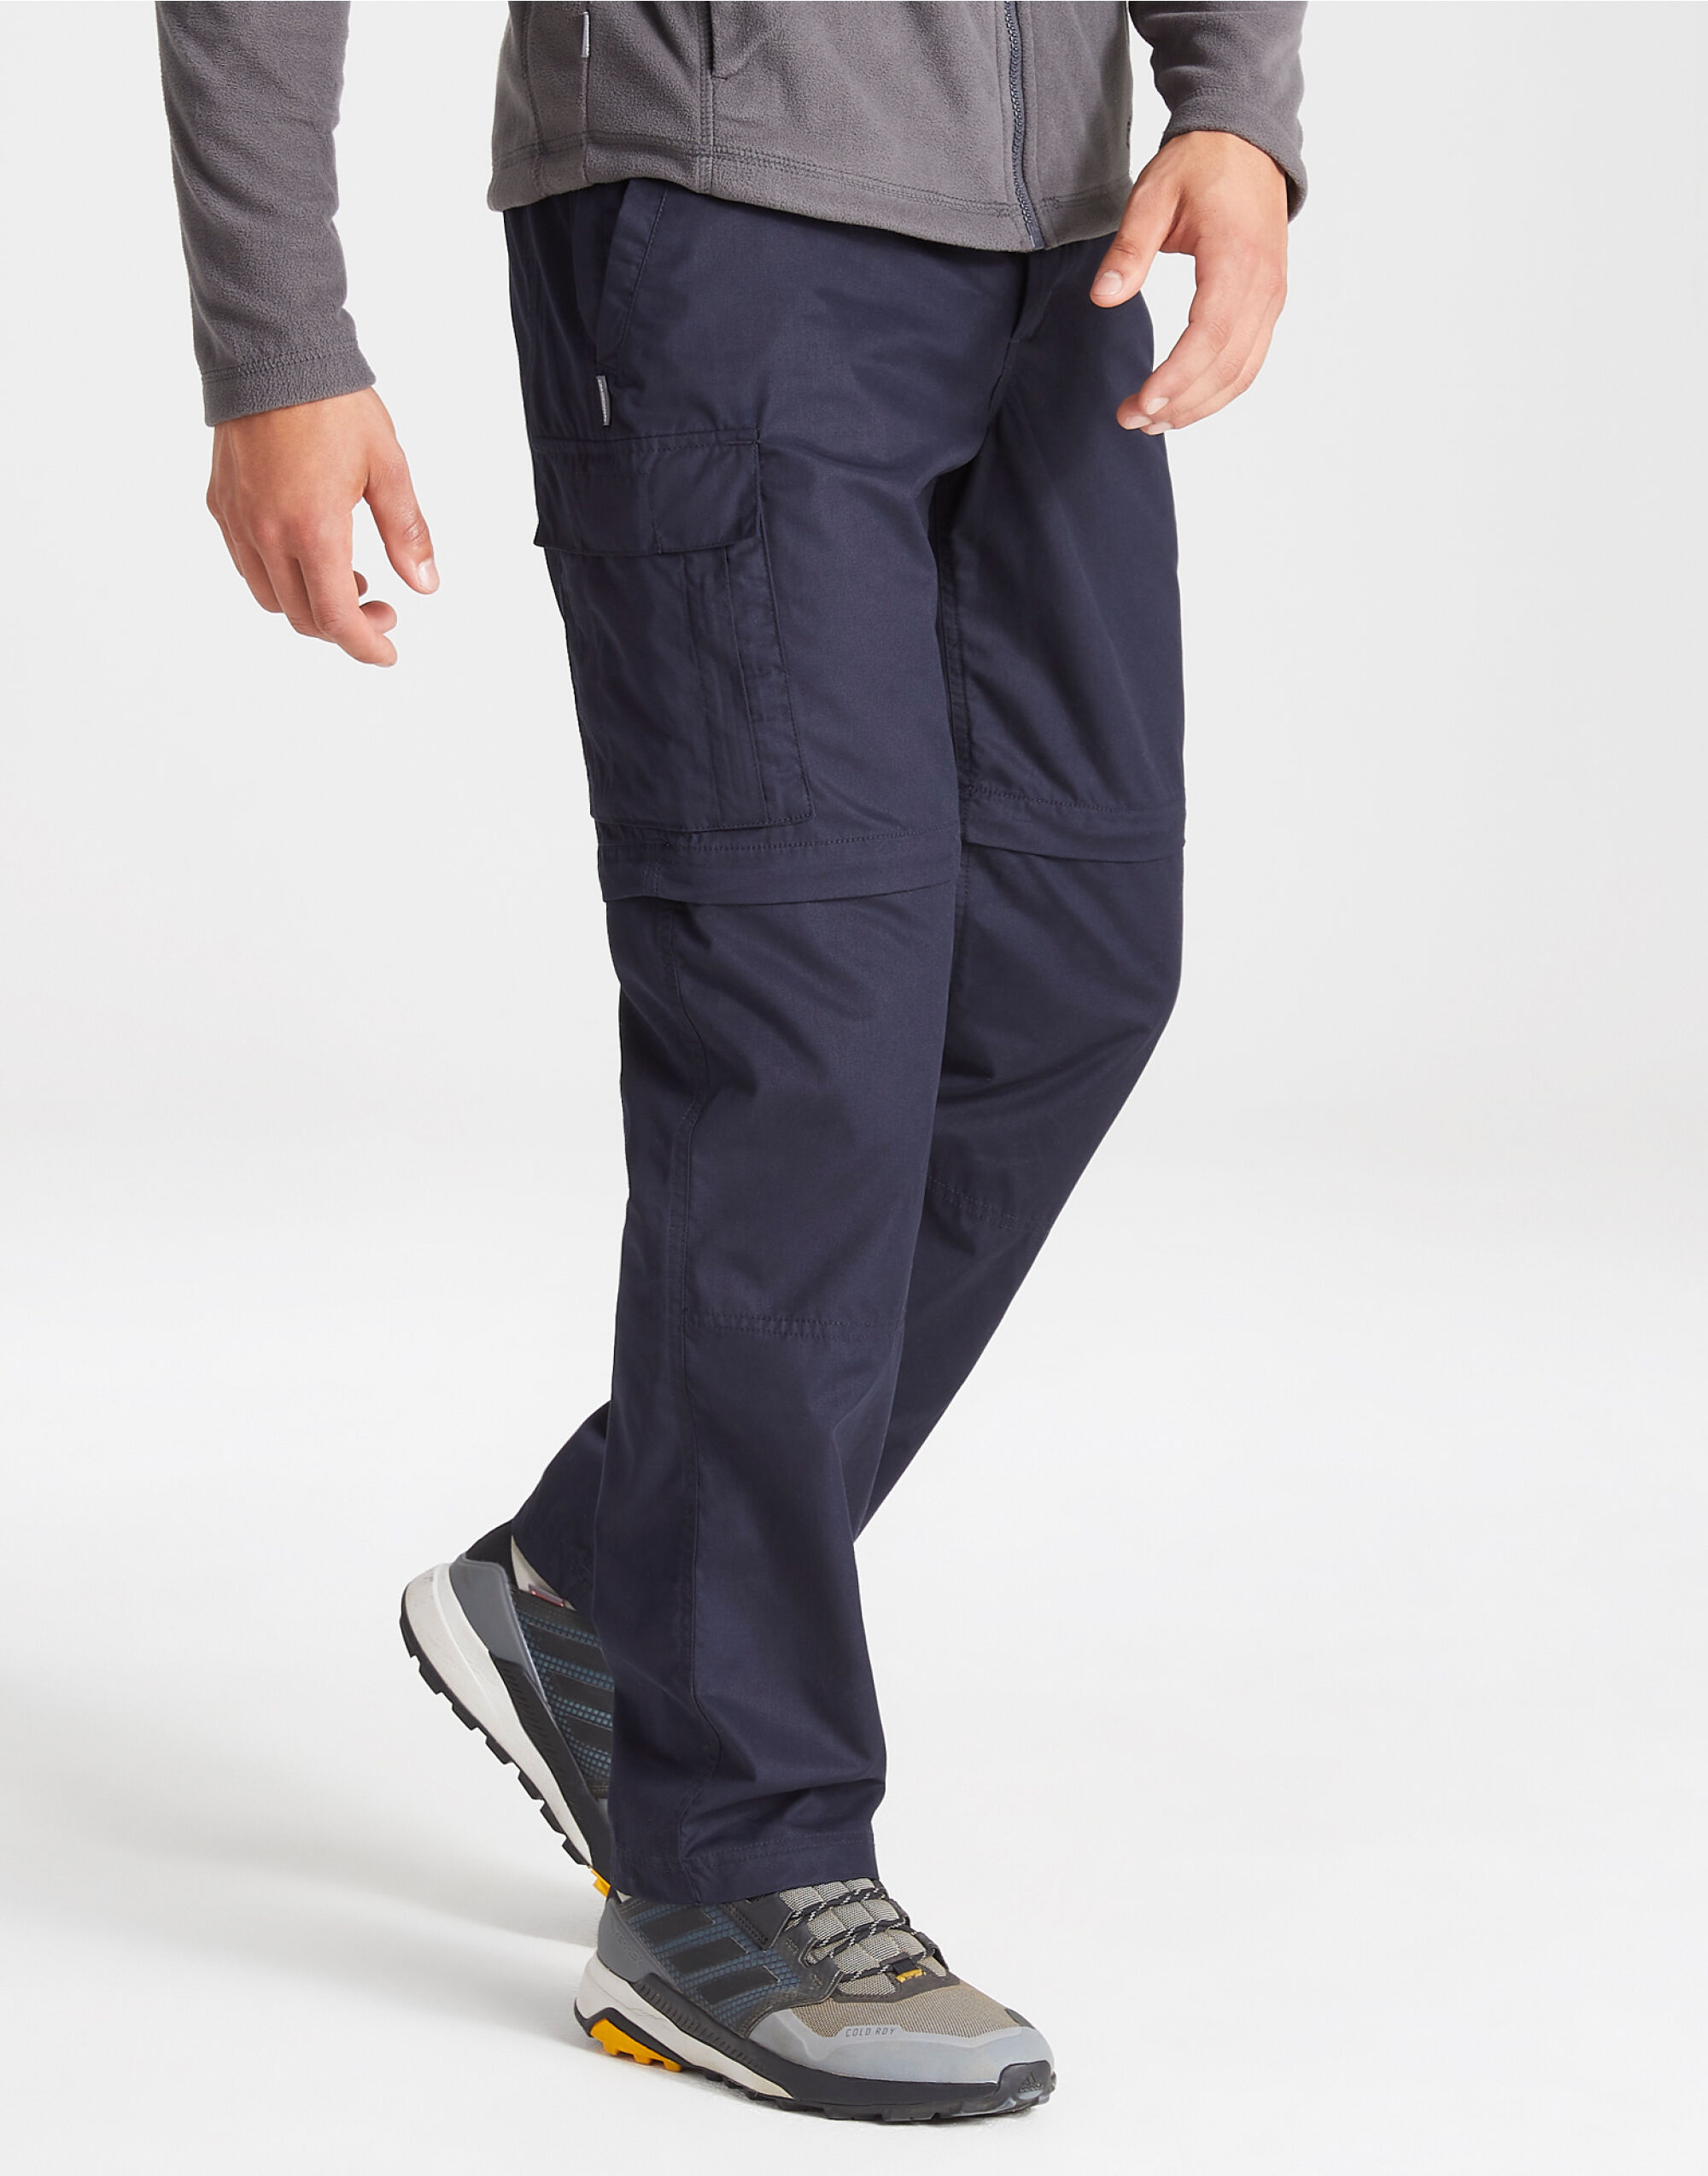 Men's Expert Kiwi Tailored Convertible Trousers (Regular)